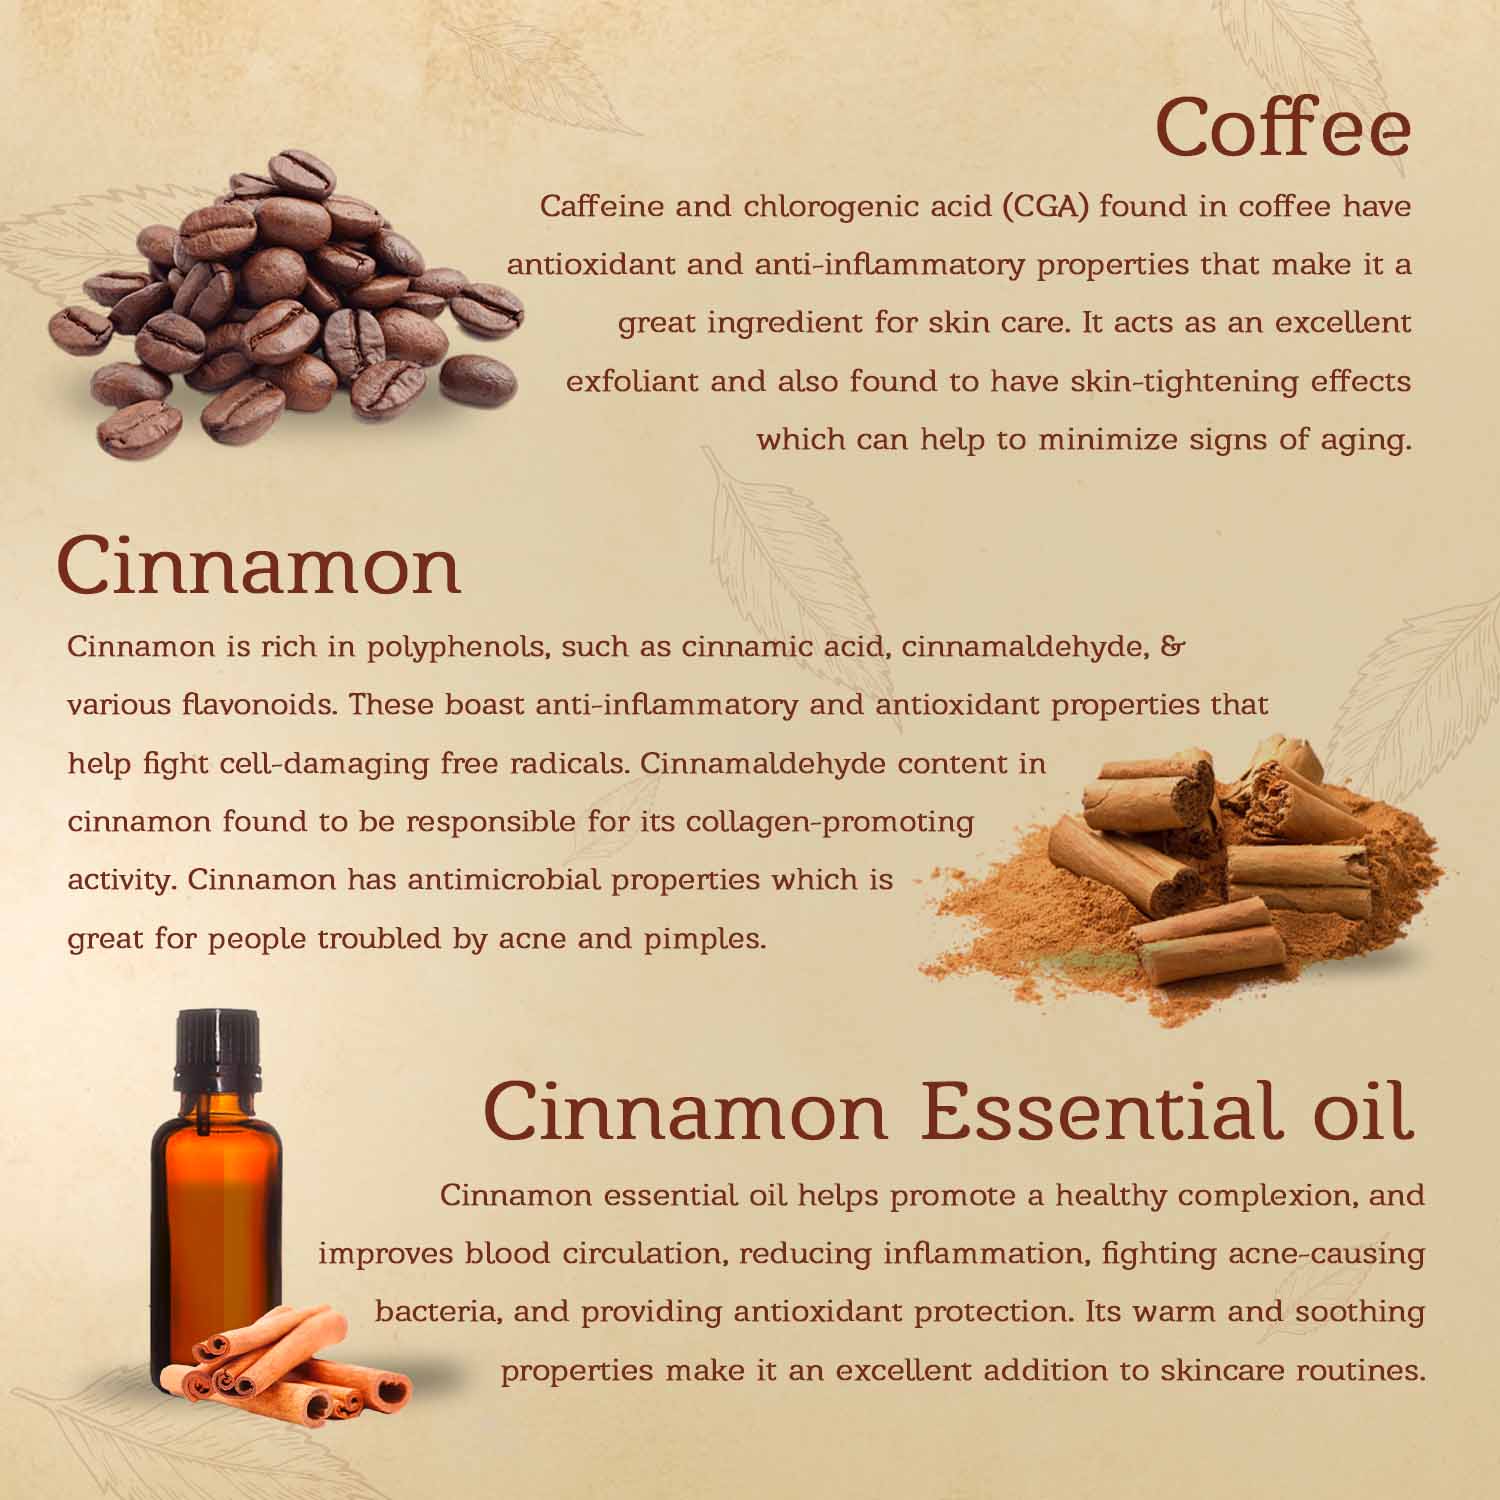 Coffee &amp; Cinnamon Soap For Dry Skin